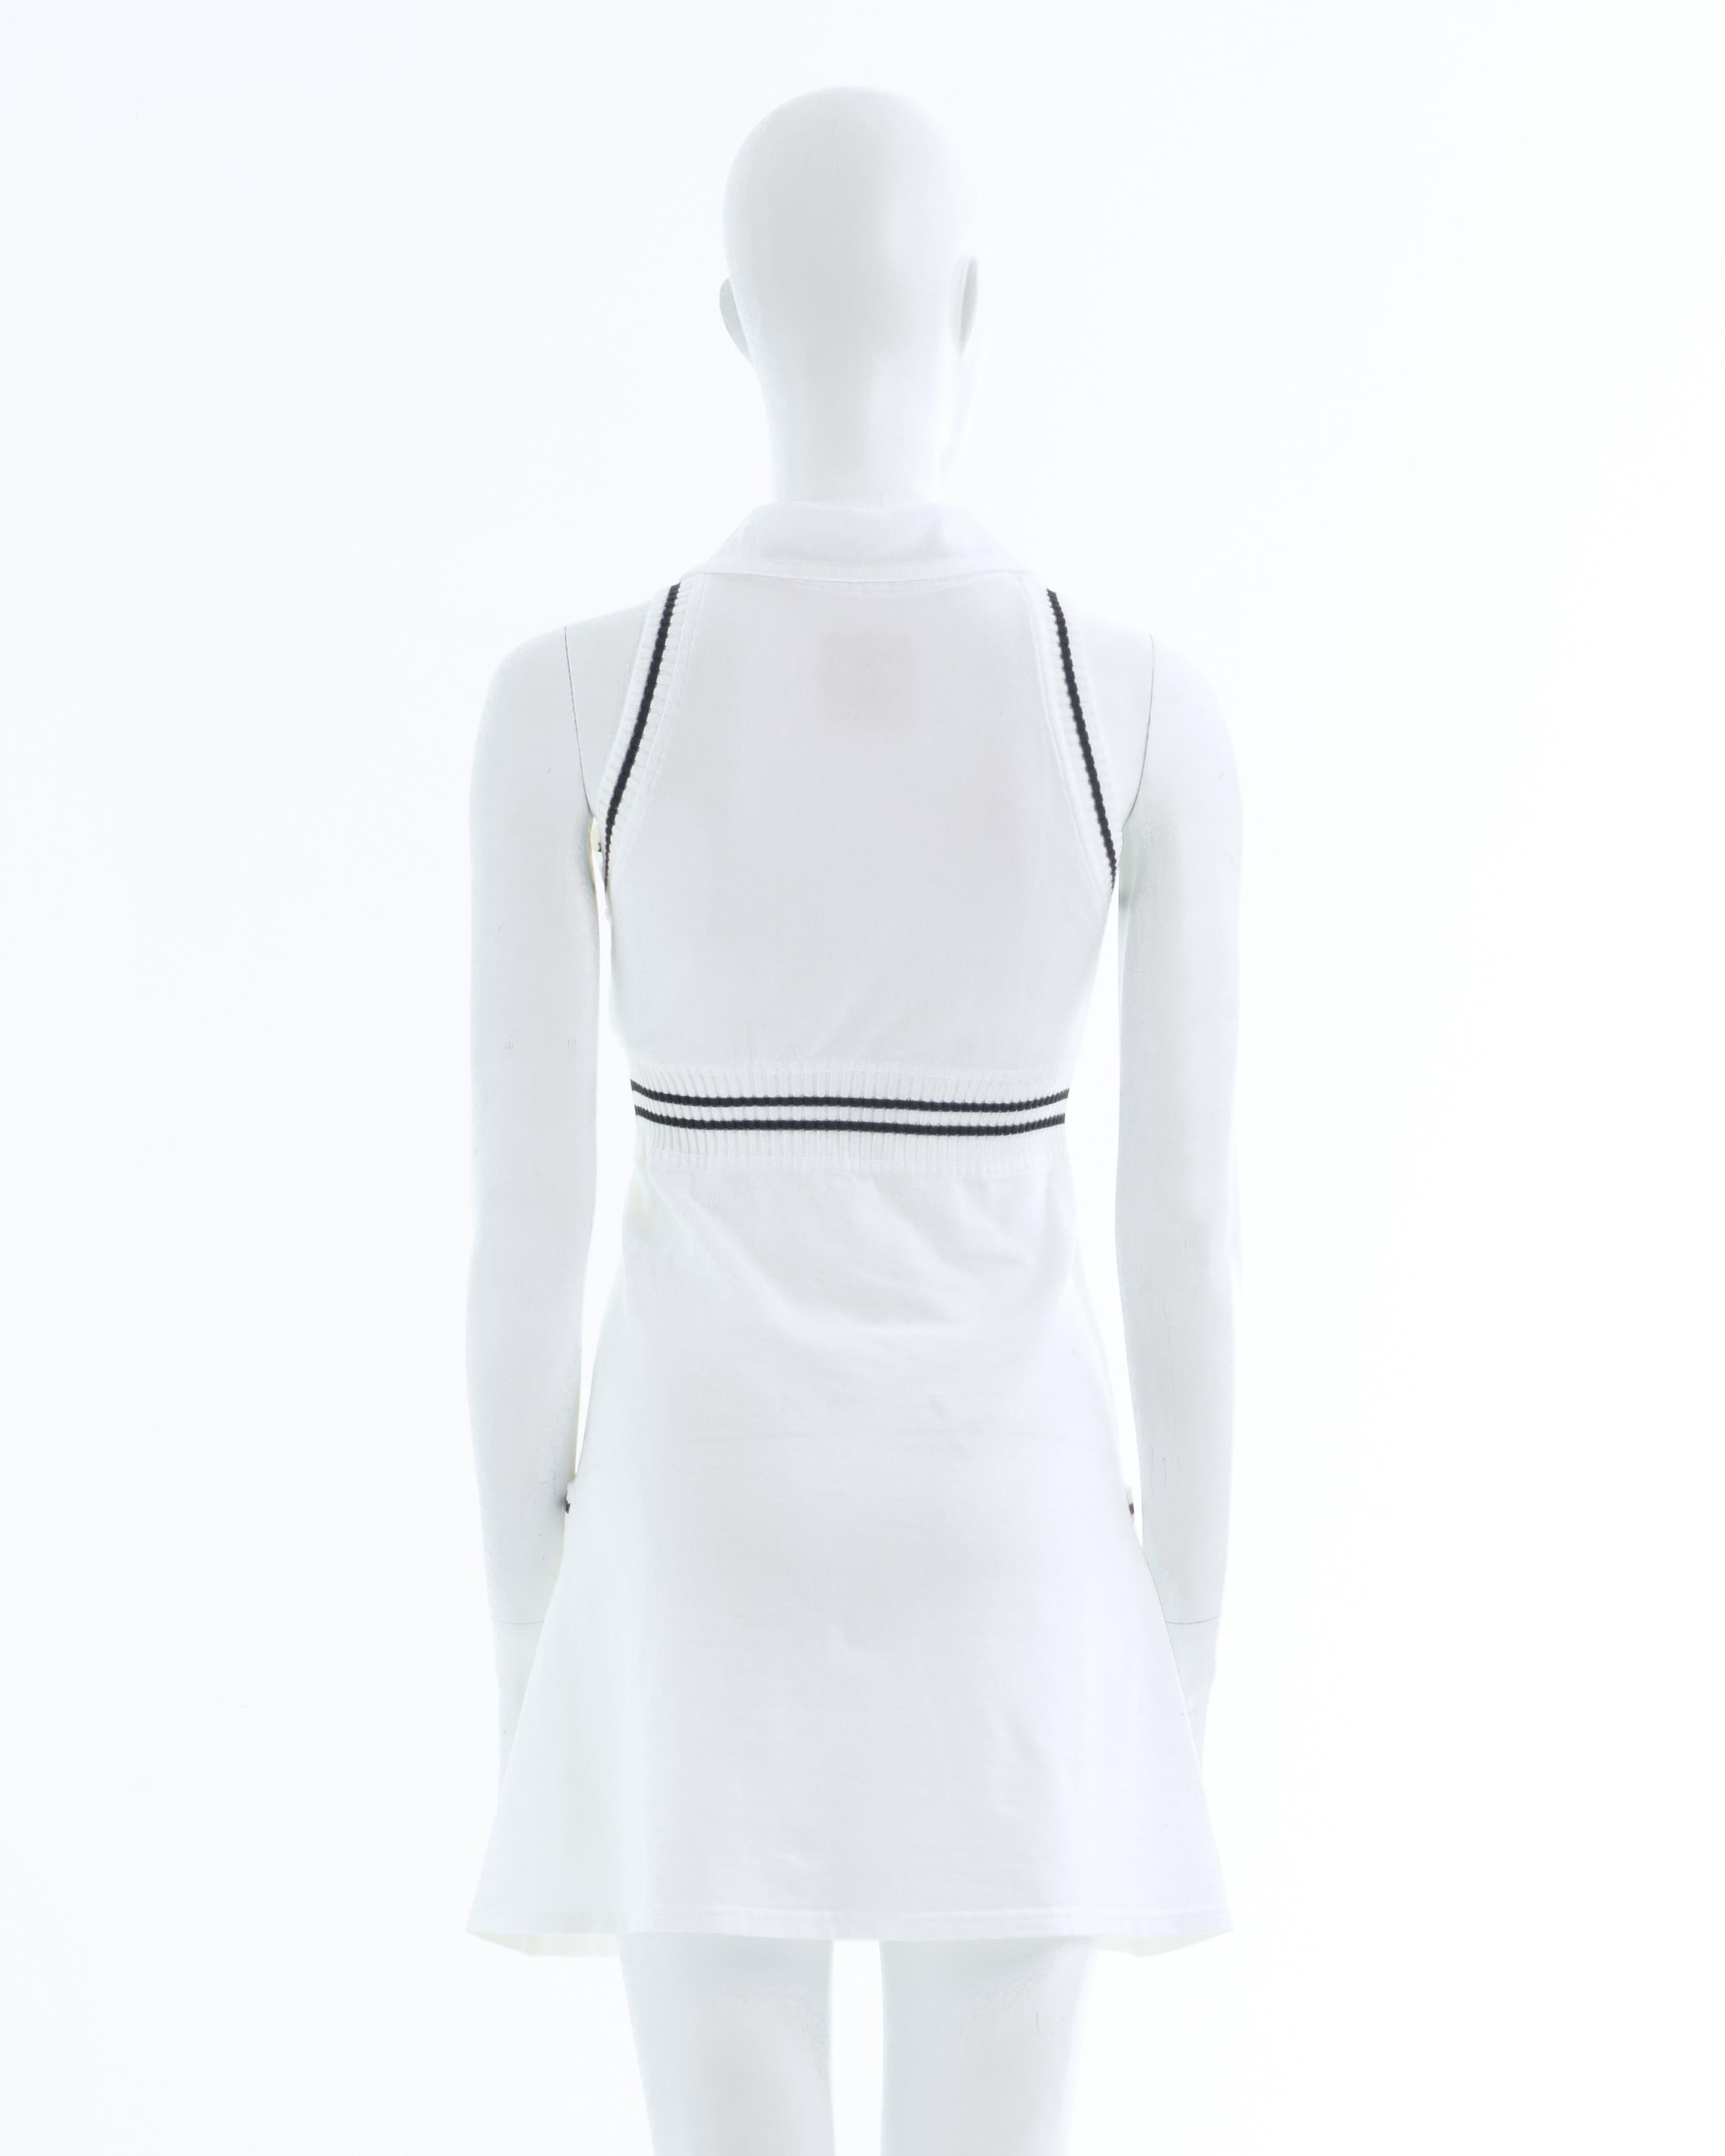 Women's Chanel by Karl Lagerfeld F/W 2003 White cotton sleeveless tennis mini dress